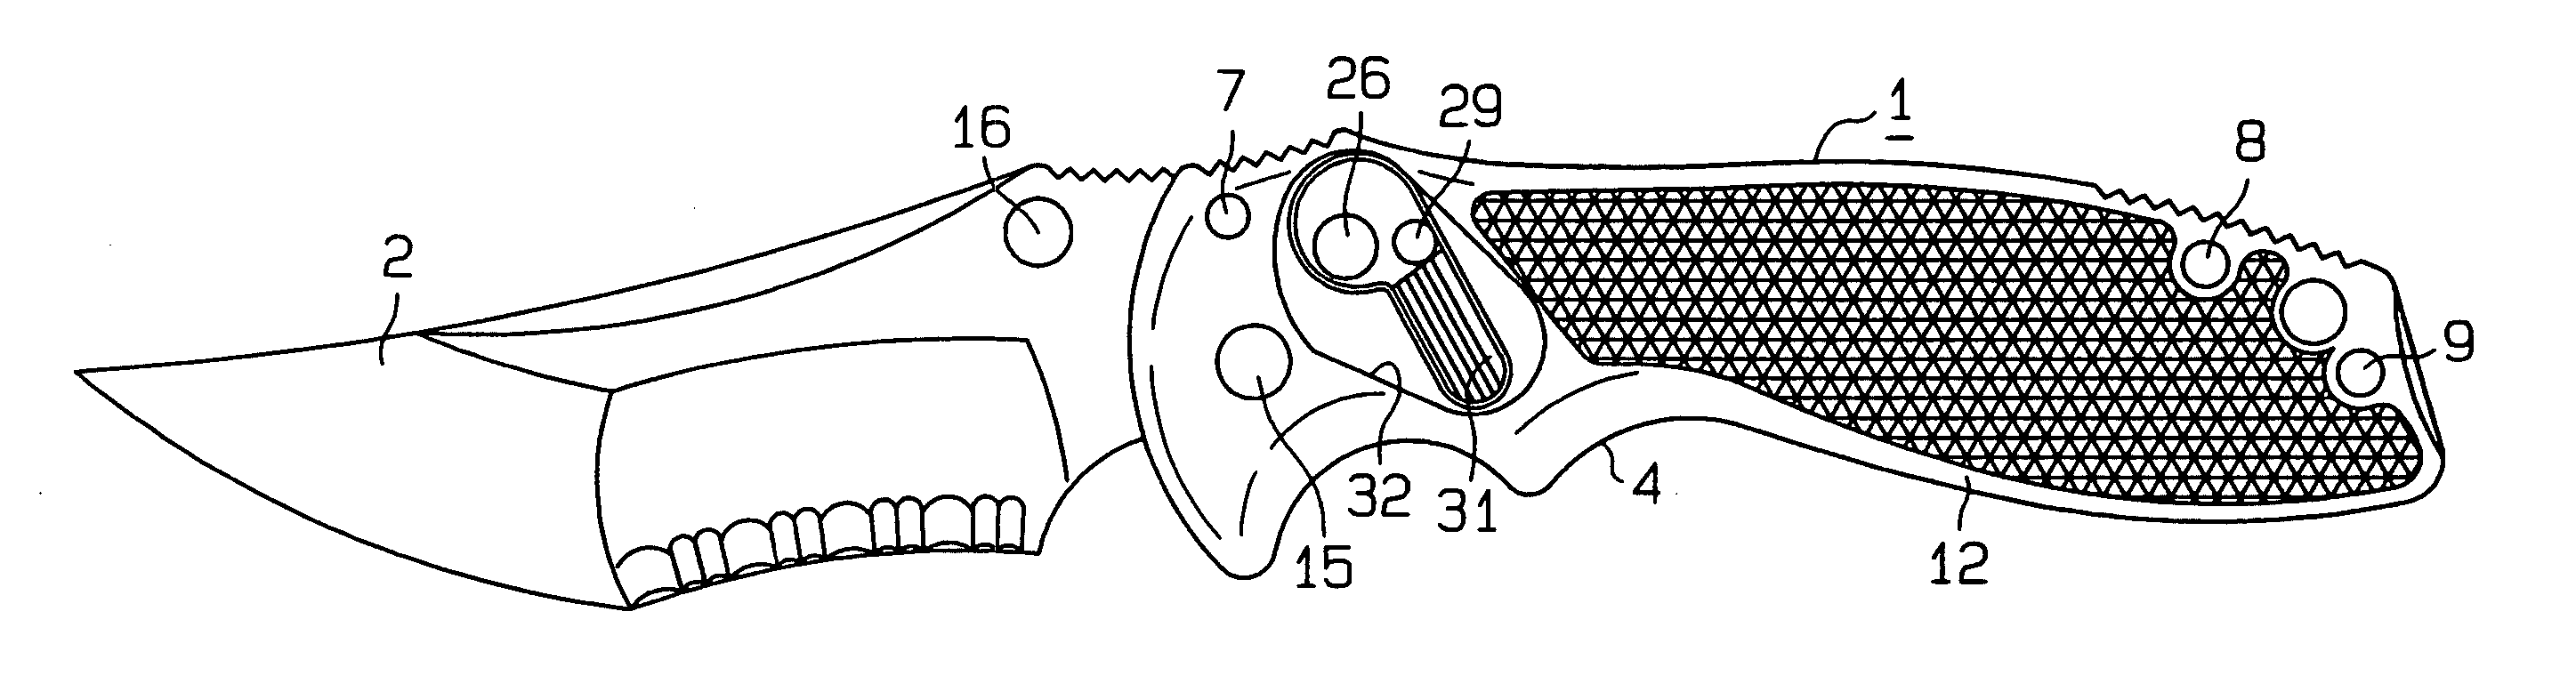 Folding knife with lock mechanism